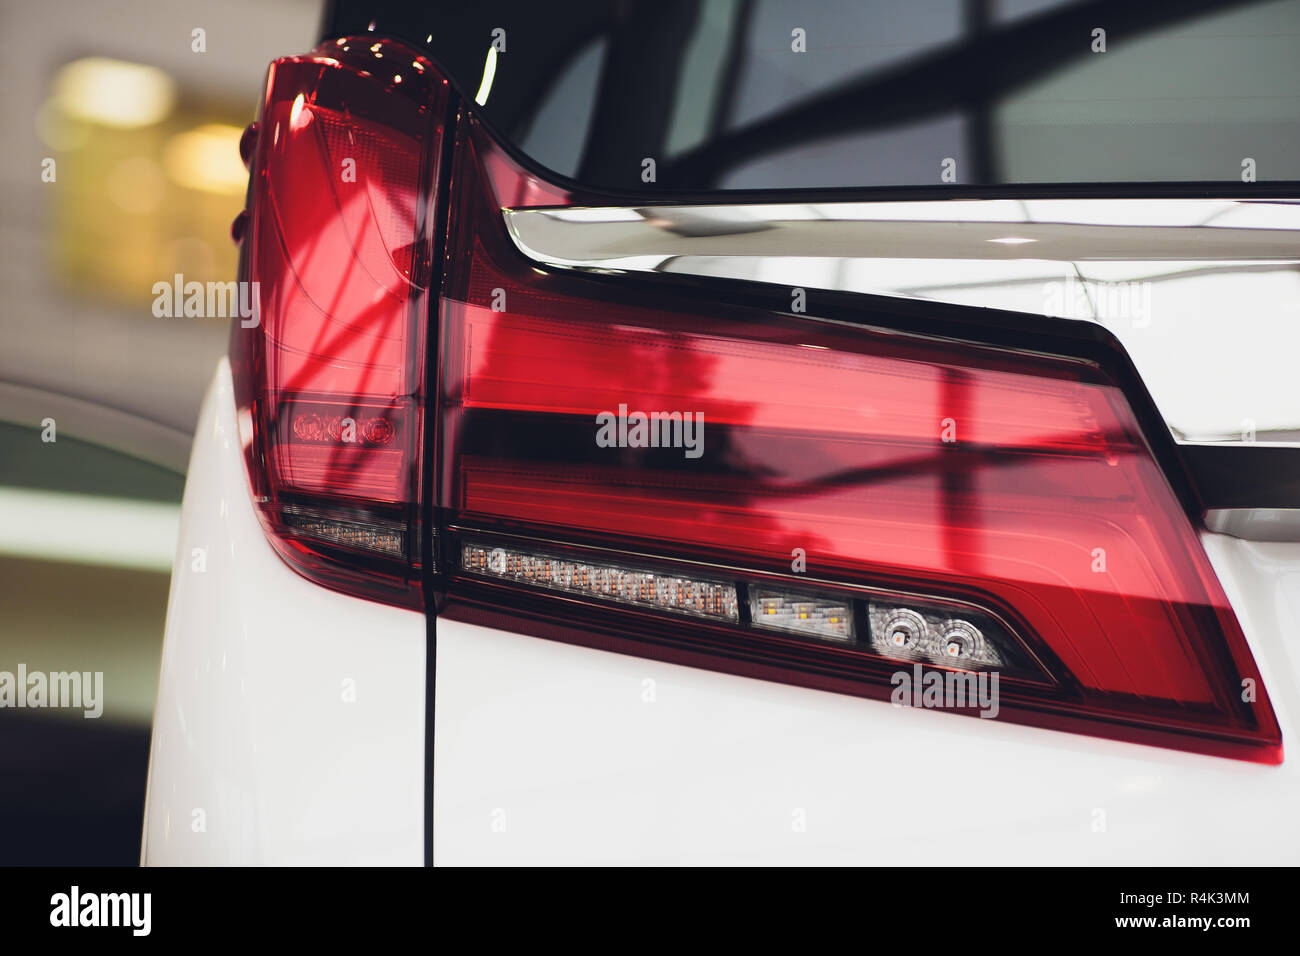 Hintere Auto in Details Beleuchtung Rückleuchte Lampe Stockfotografie -  Alamy